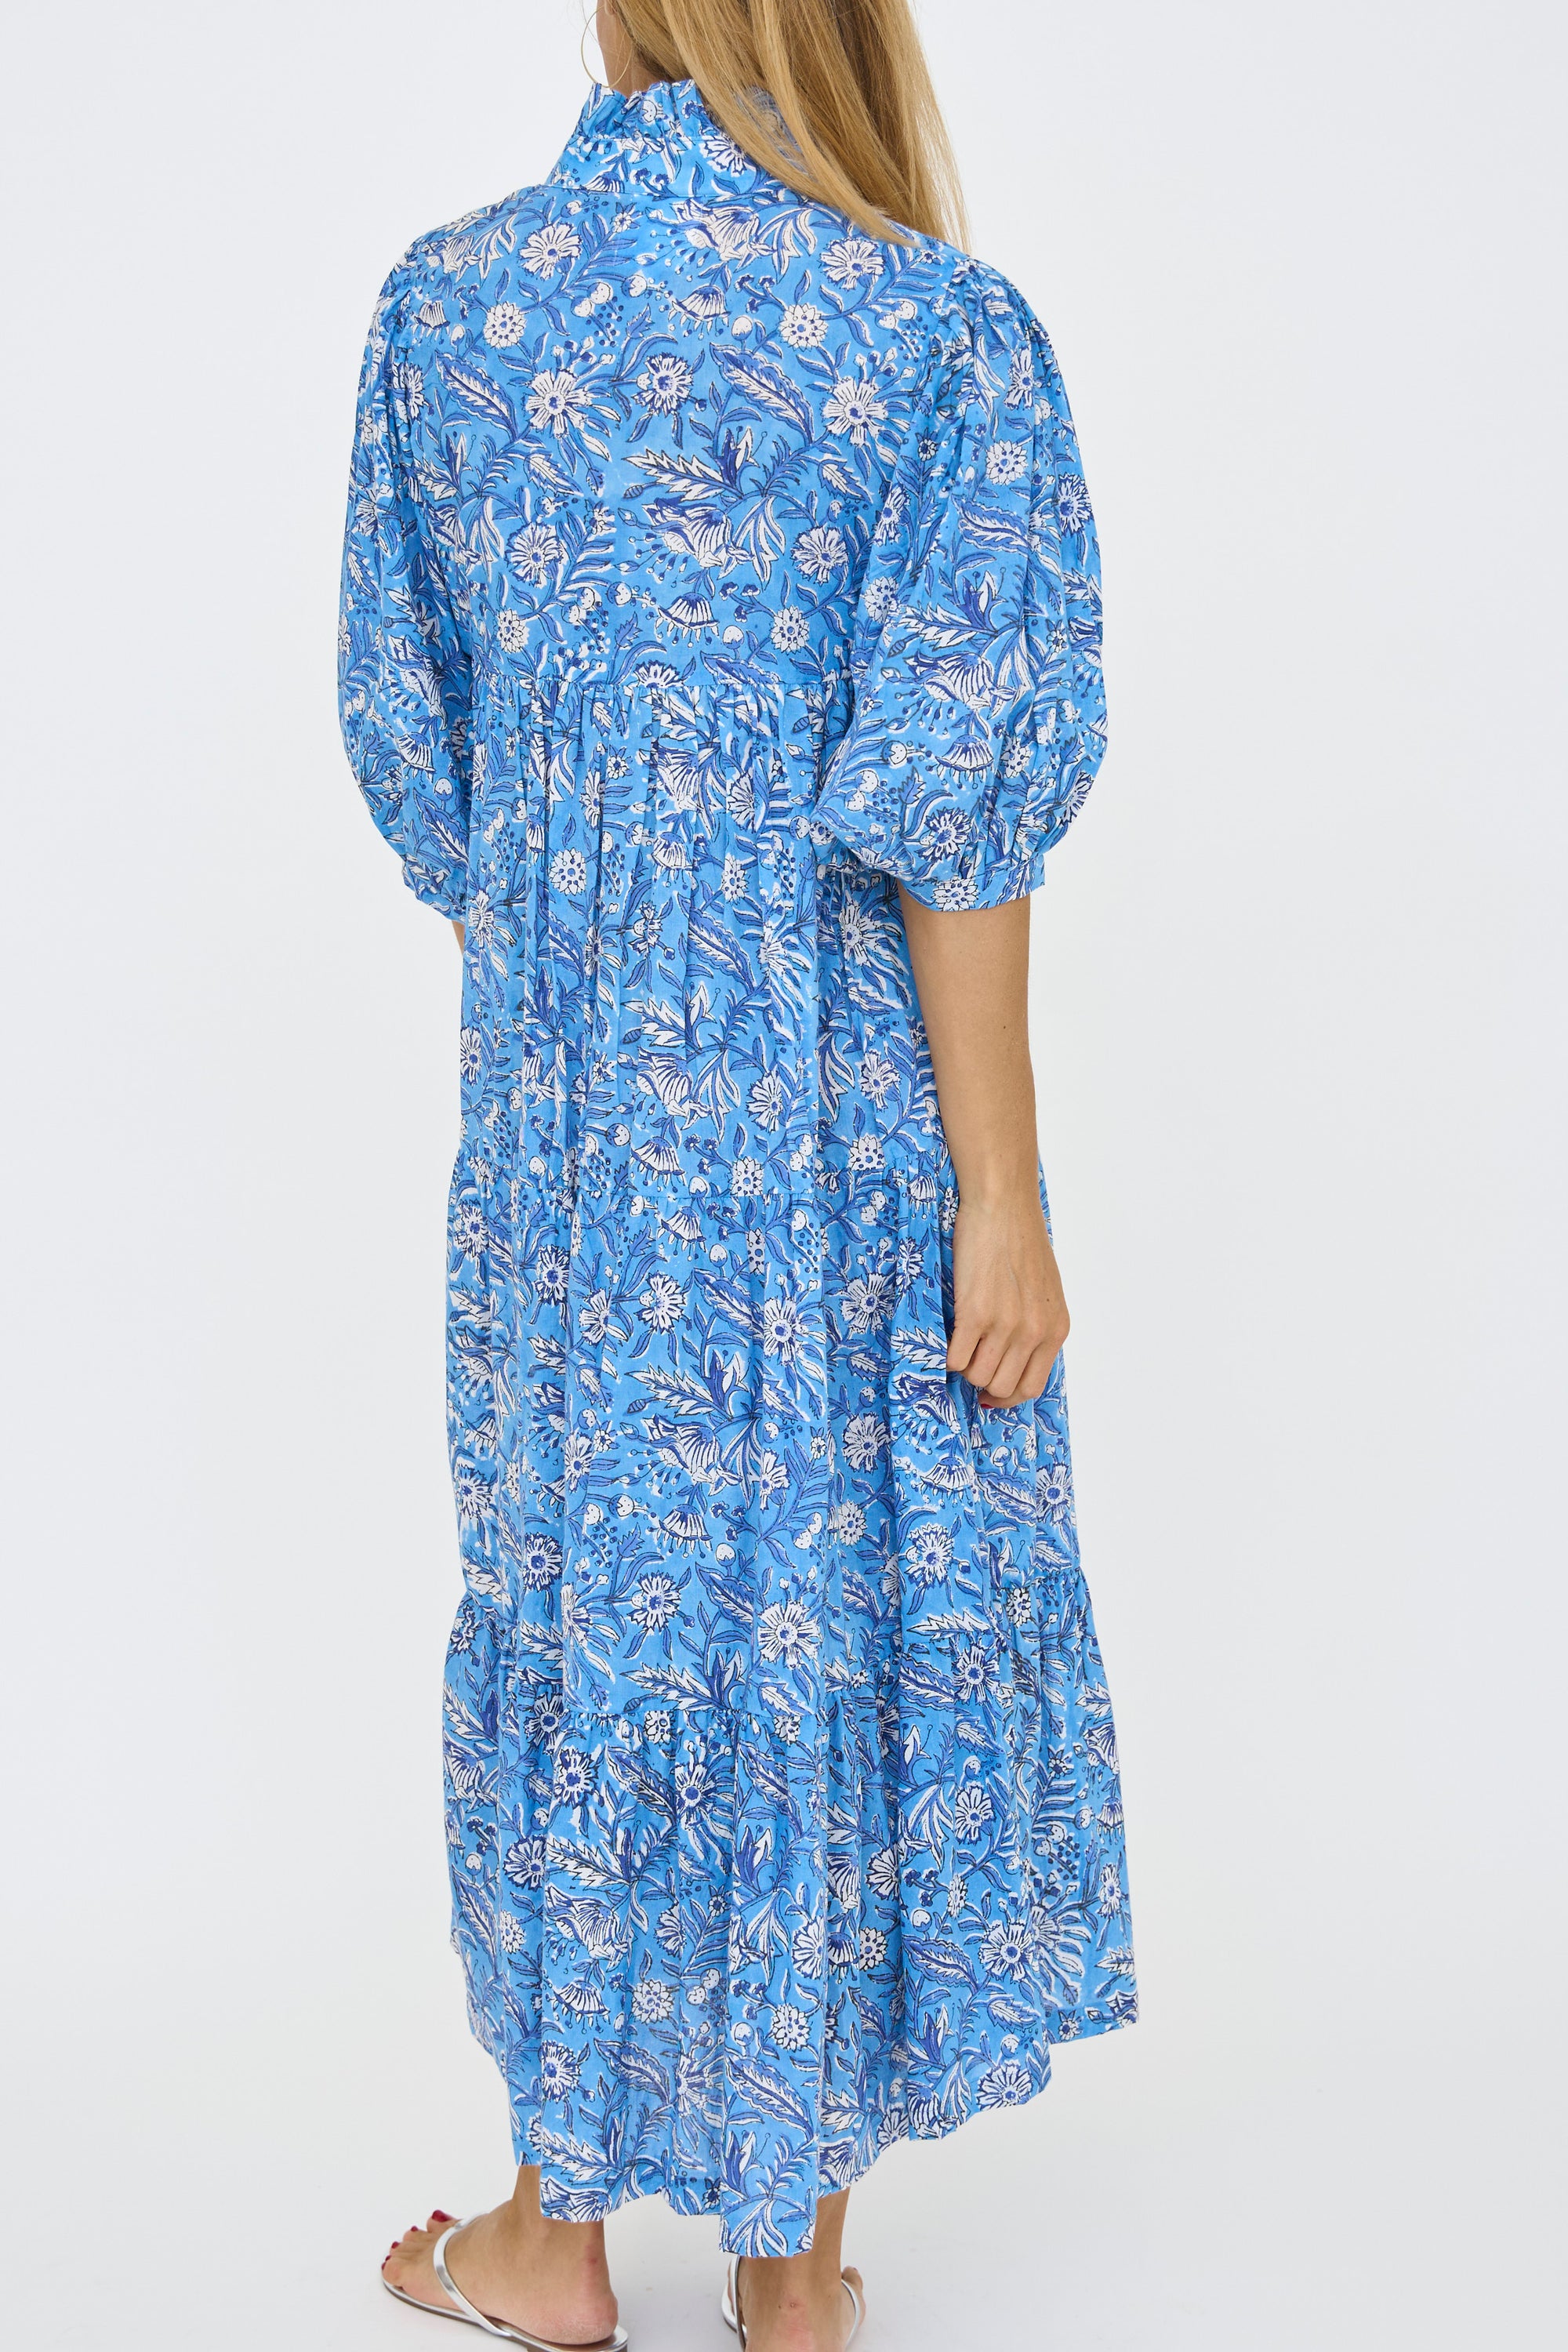 Palmetto Print Dress - Azure